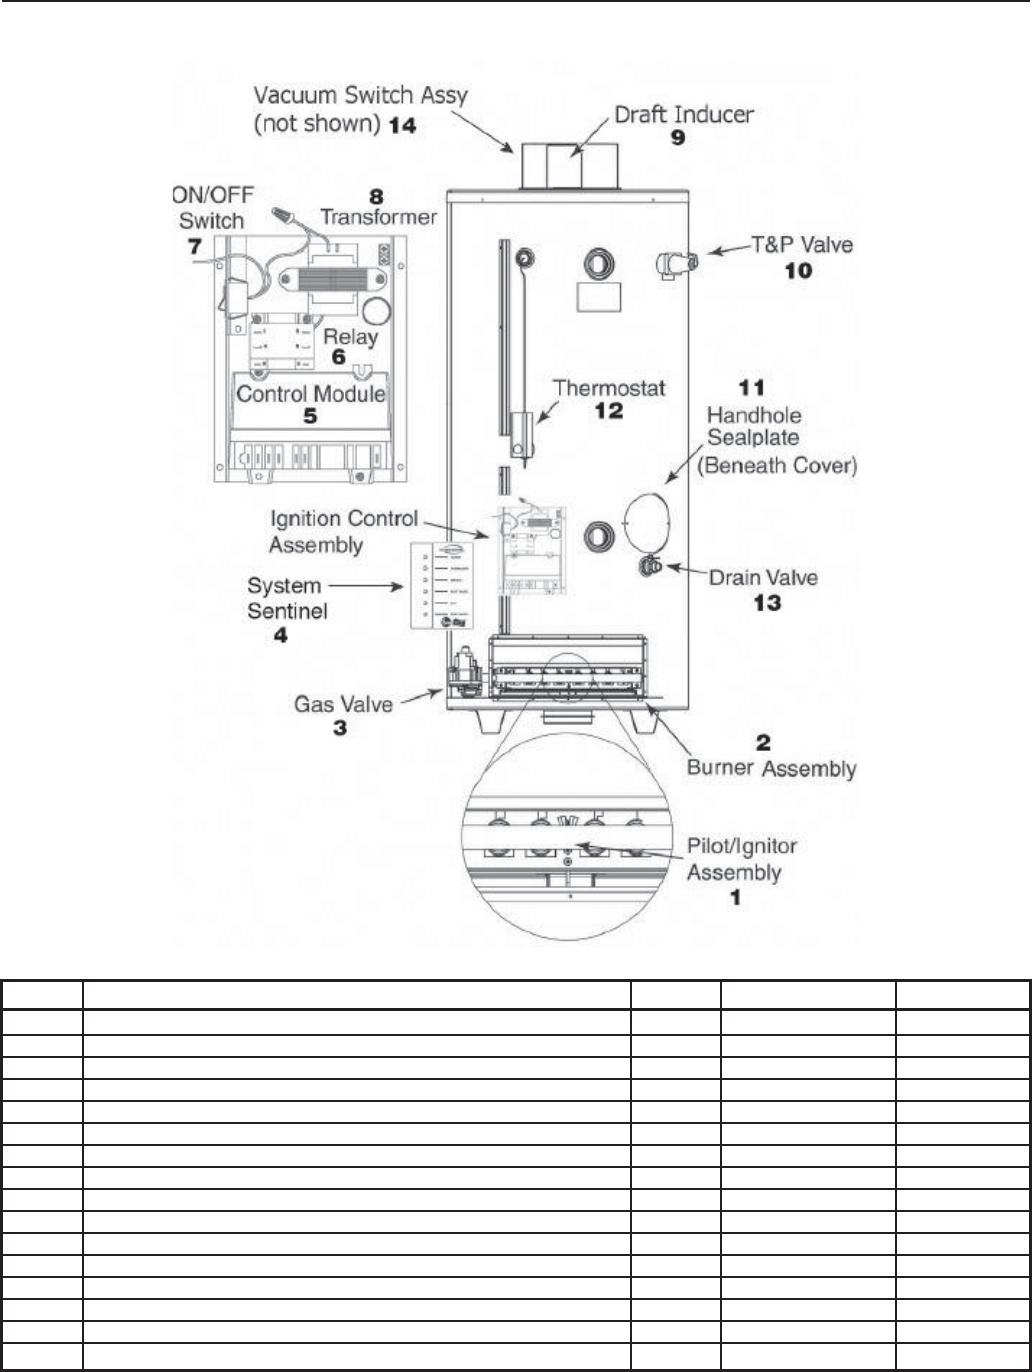 Rheem Water Heater parts catalog